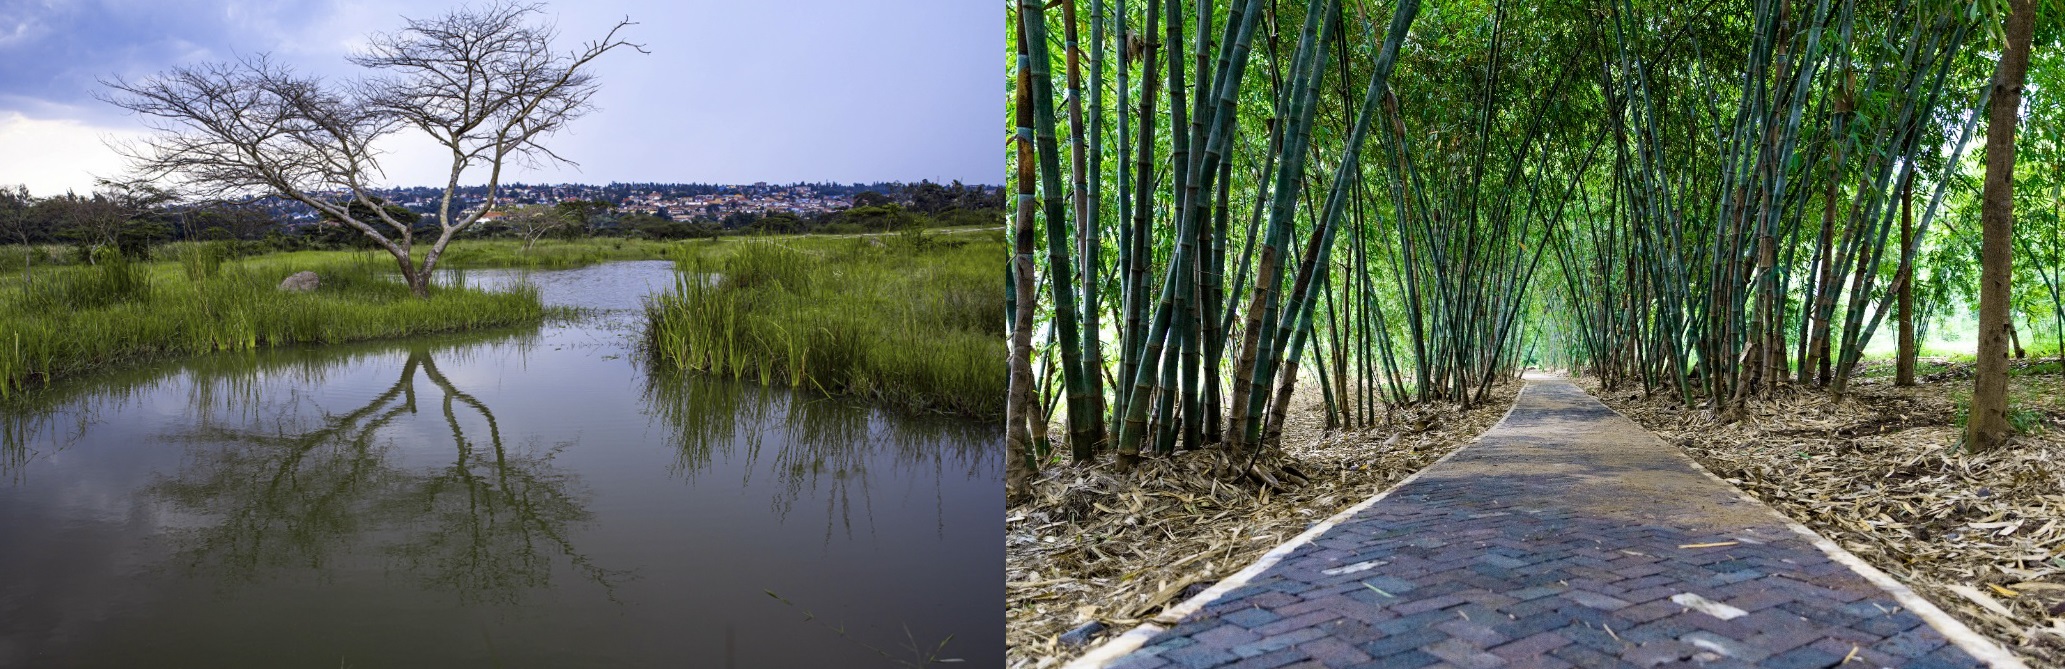 nyandungu urban wetland eco tourism park